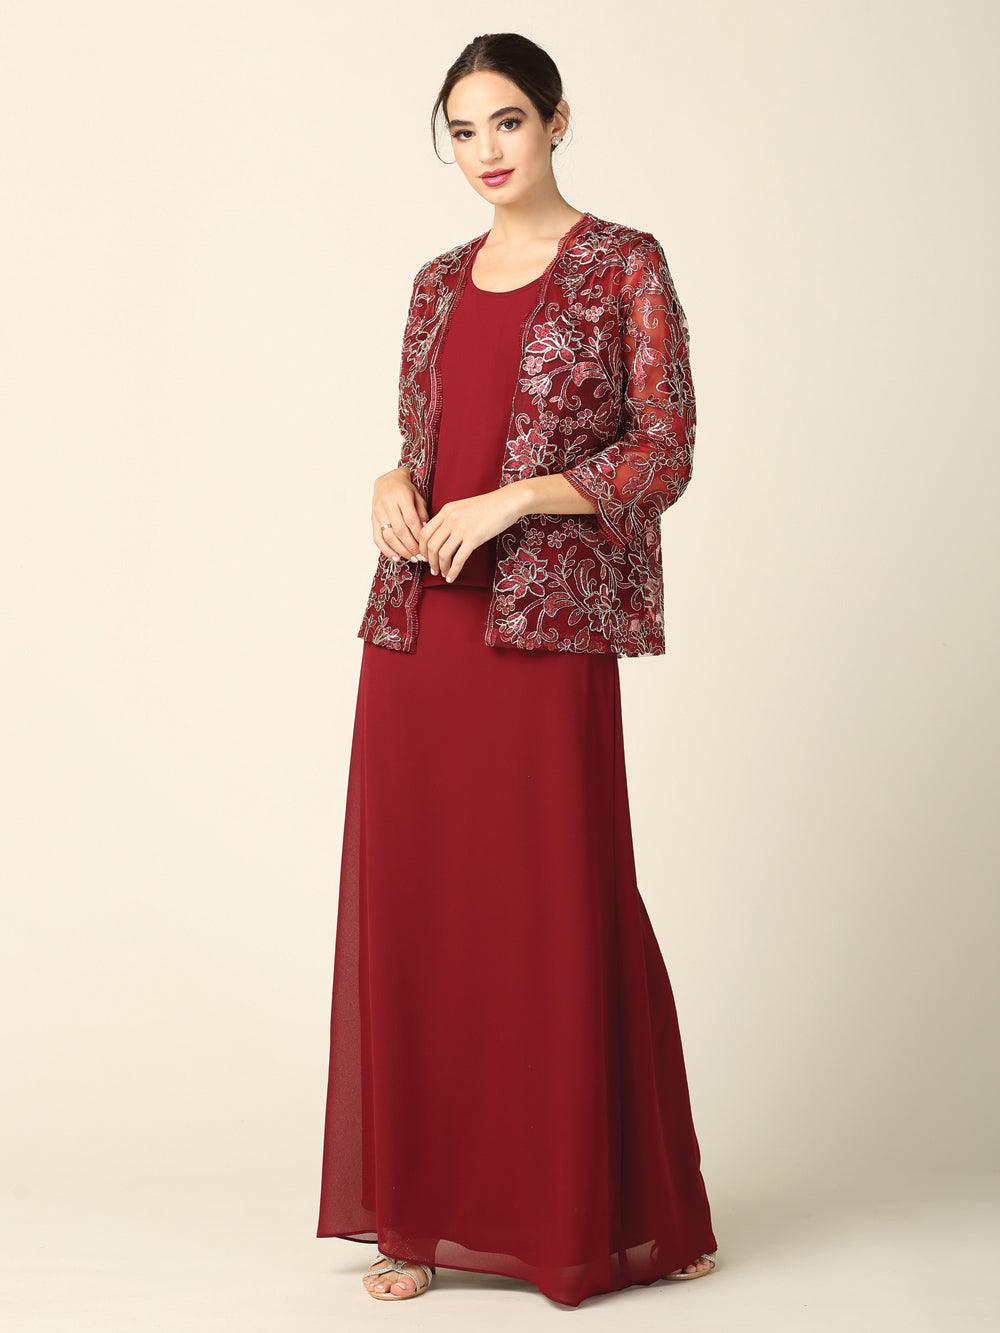 Lace Jacket Satin Chiffon dress designs 2k21//Stunning ideas of party wear  dresses - YouTube